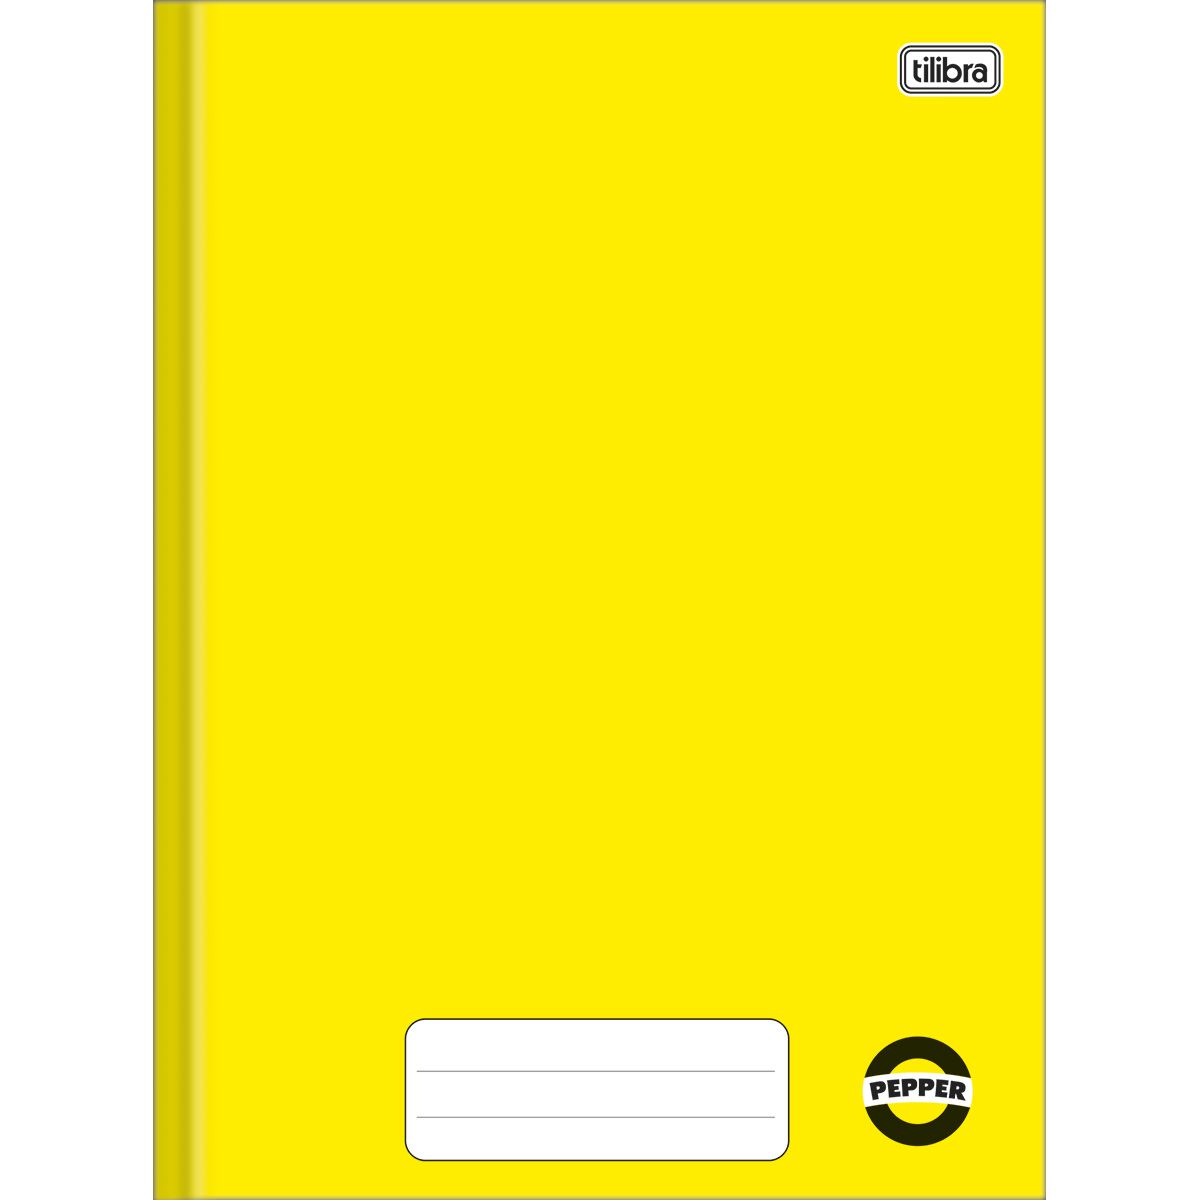 Caderno brochura 40 fls amarelo PEPPER Tilibra